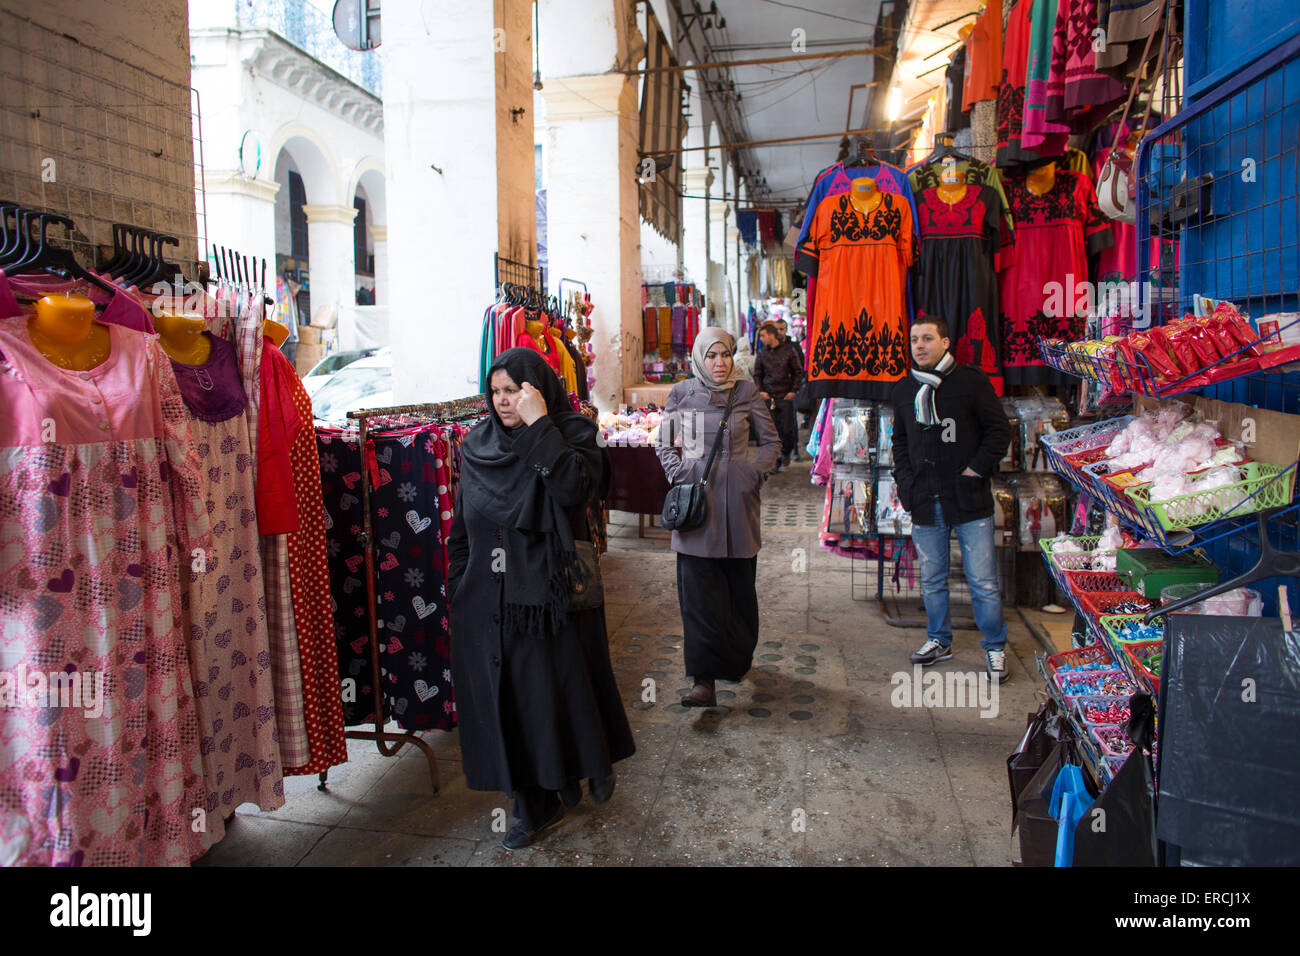 clothes market in Algiers, Algeria Stock Photo